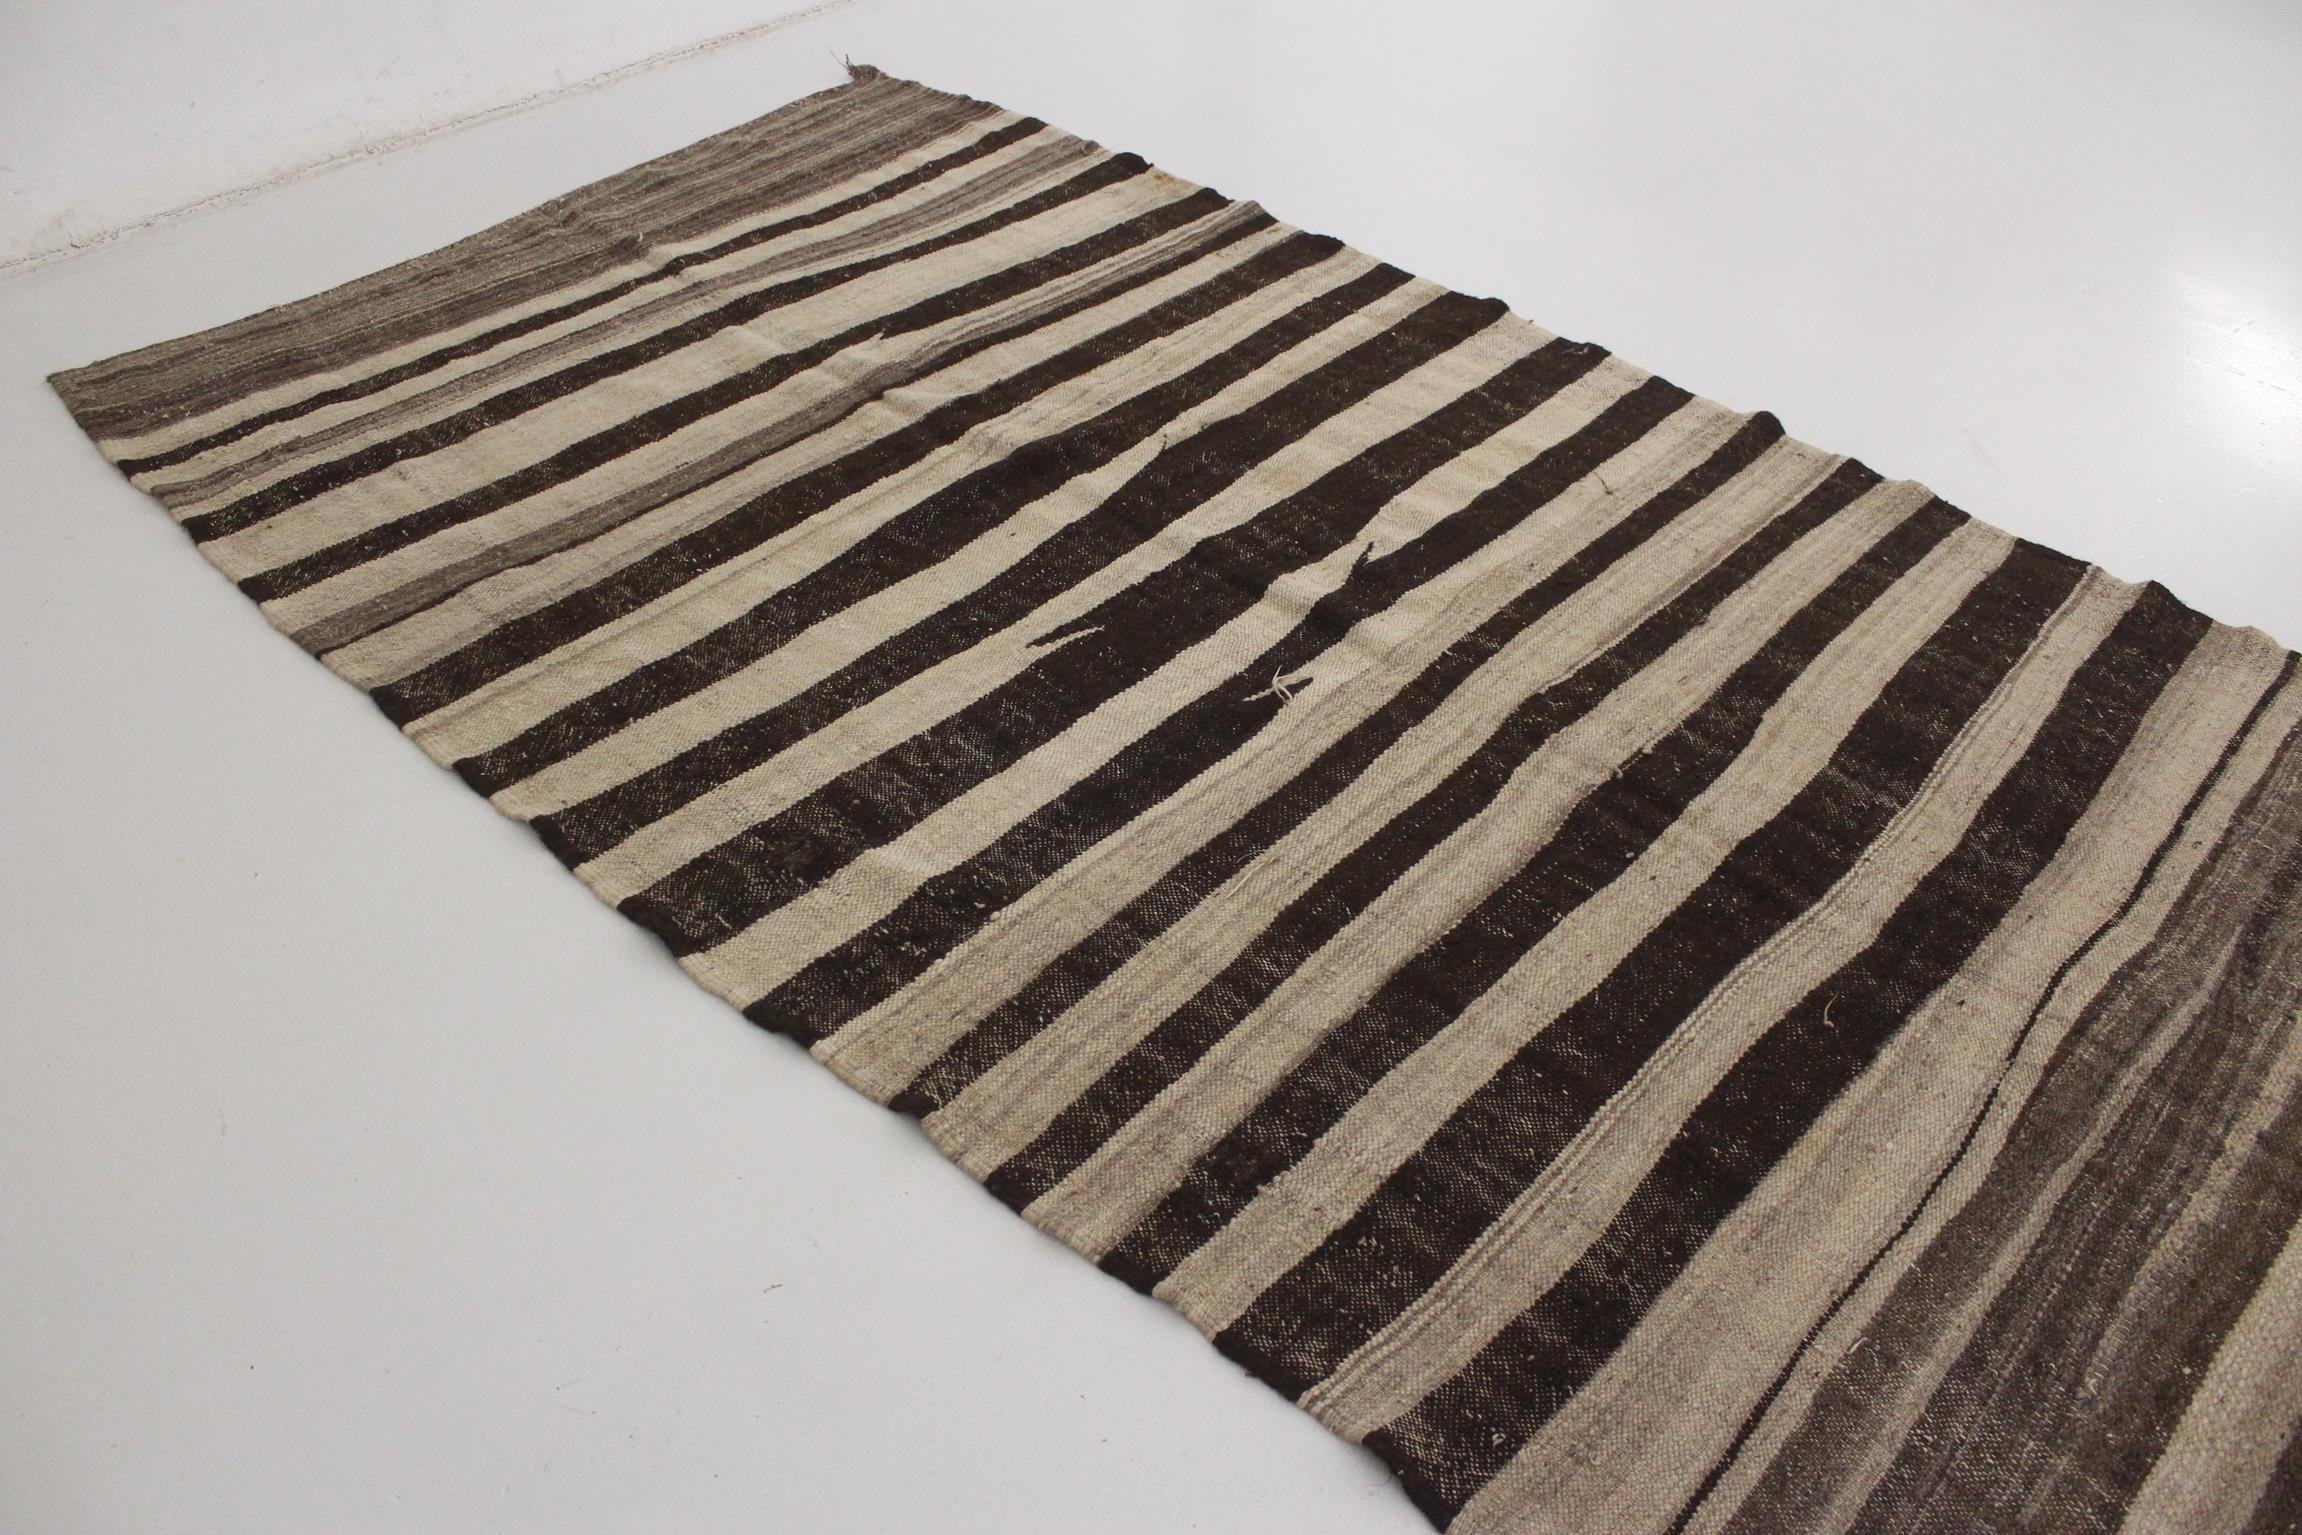 Tribal Vintage Moroccan Kilim rug - Stripes in beige+brown - 4.6x14.4feet / 142x440cm For Sale